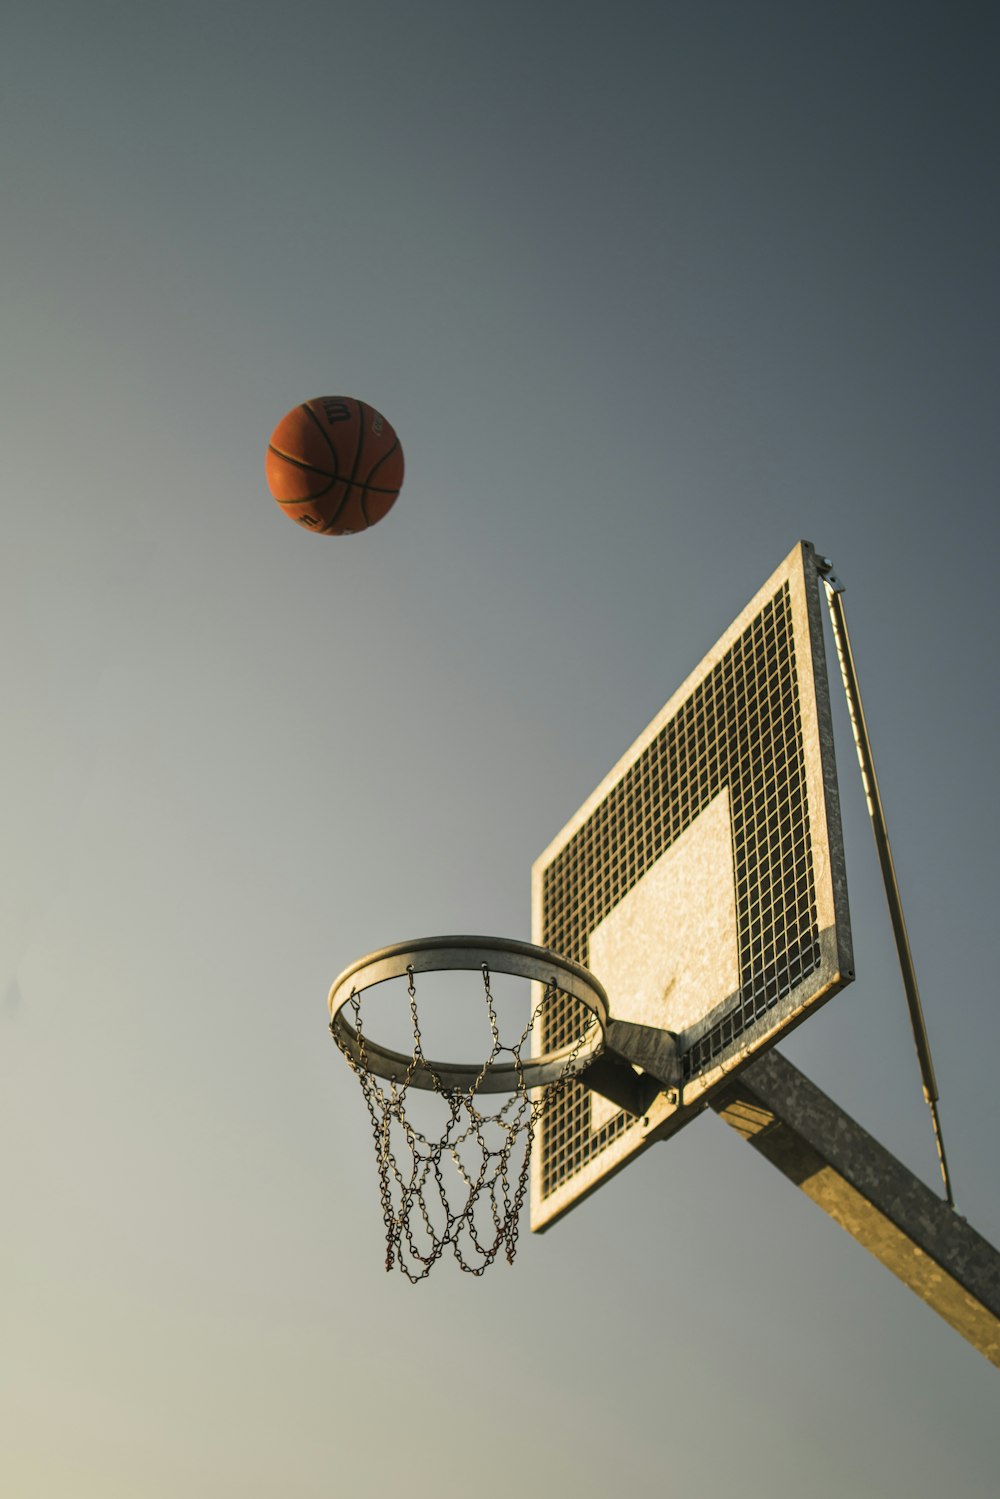 Support de basket-ball photo stock. Image du trame, claquement - 80017514